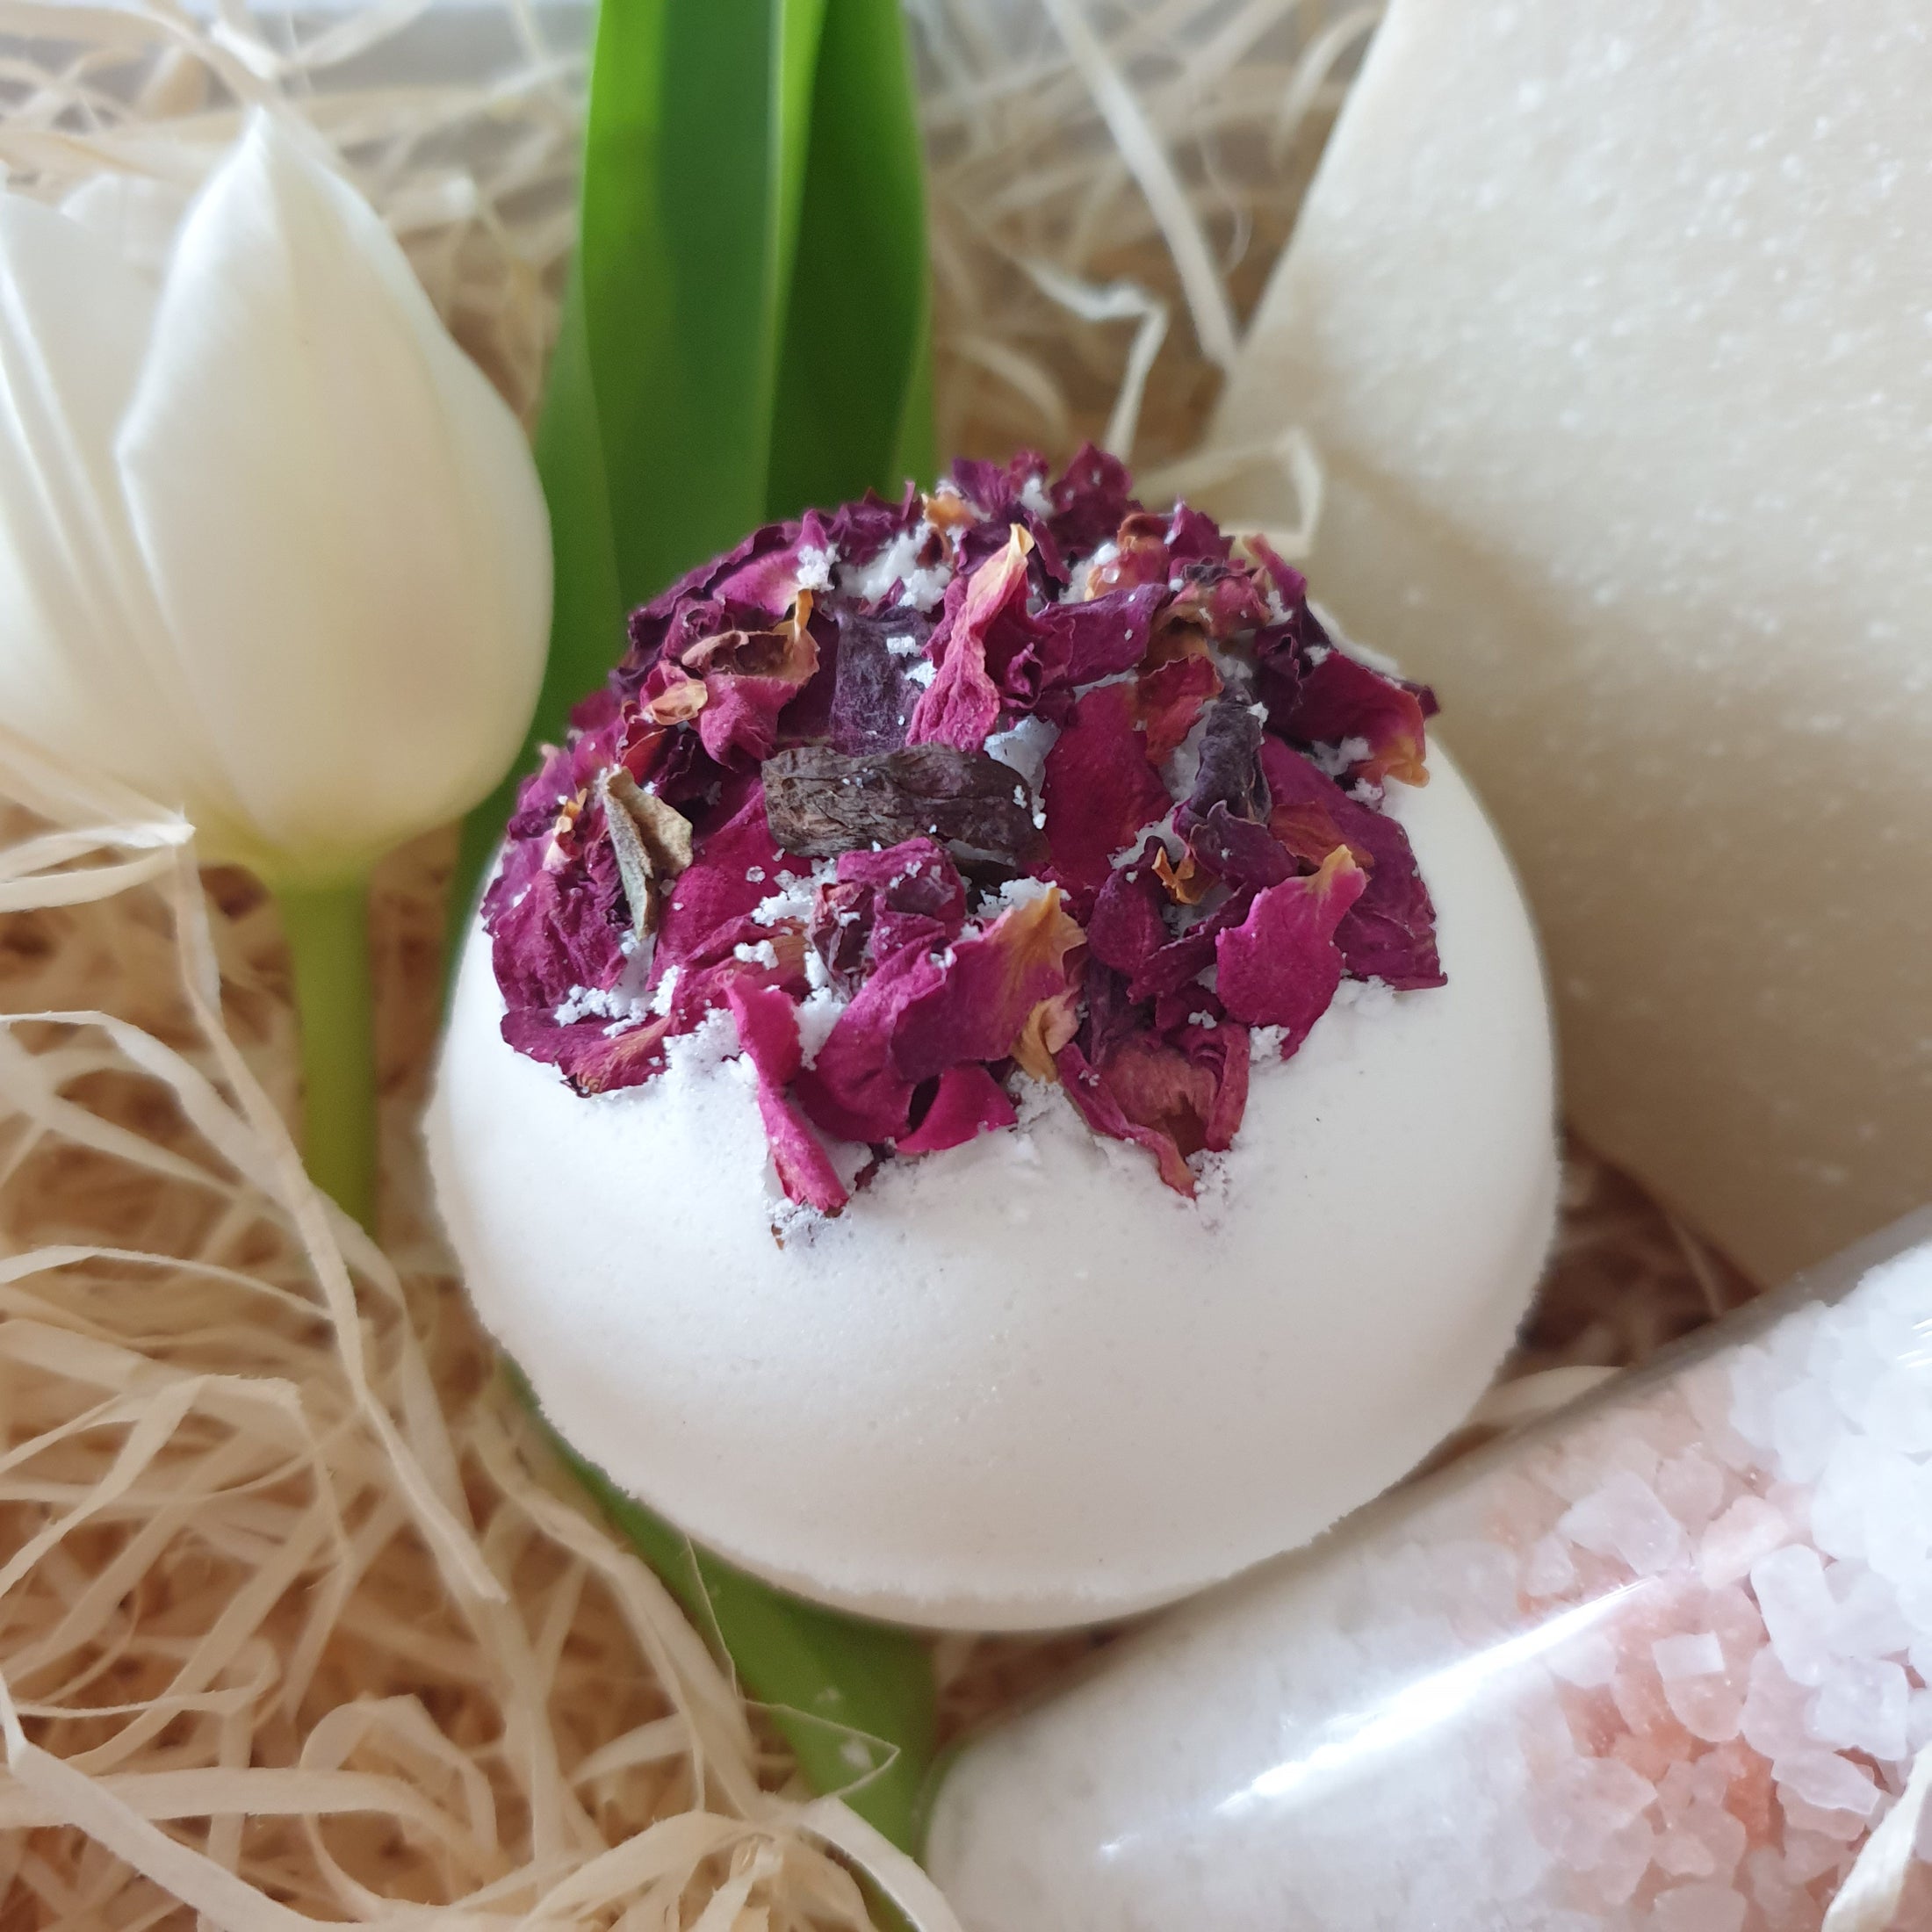 Handmade vegan rose bath bomb, showcasing its natural ingredients like dried rose petals.